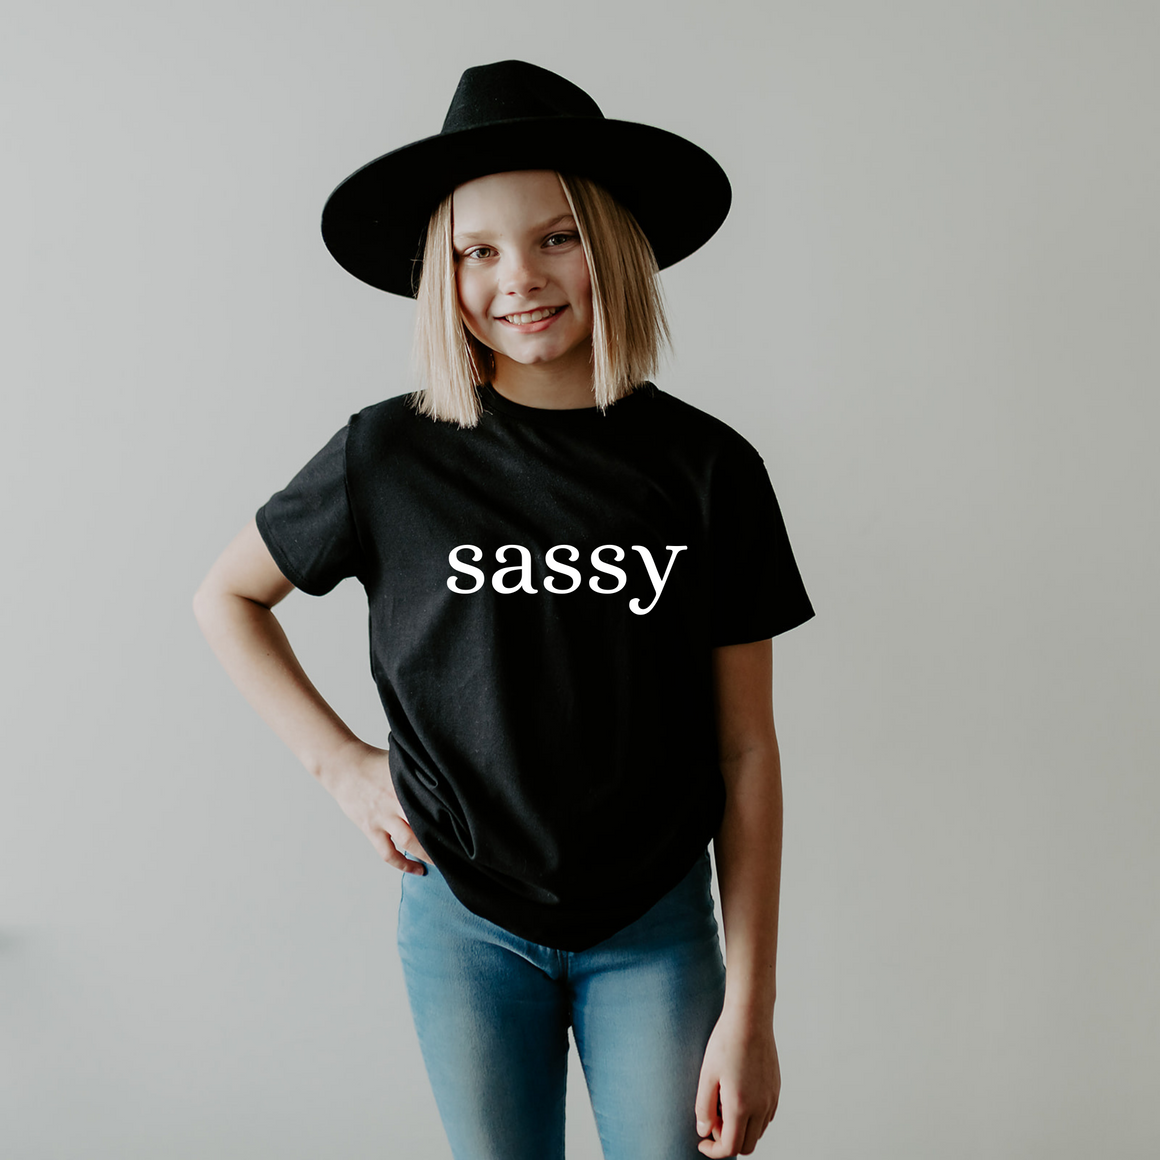 Sassy Tee Shirt Youth - Posh & Cozy